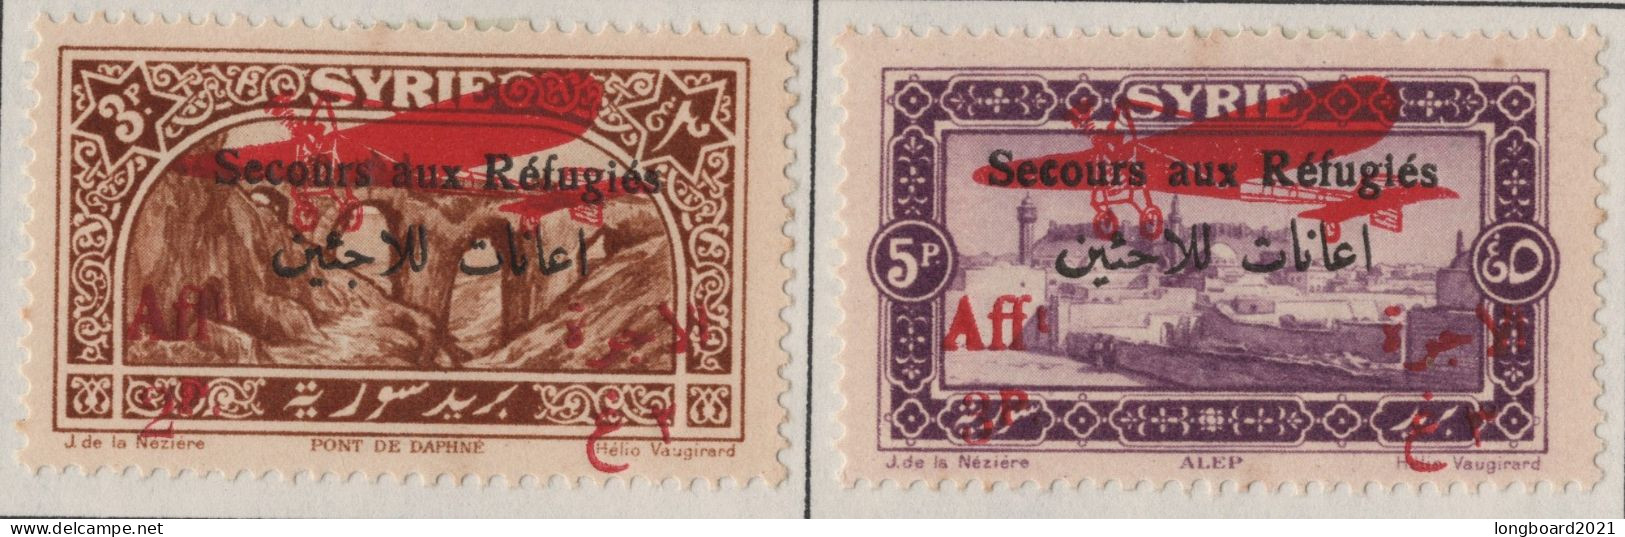 SYRIA - SET 1926 3 + 5 P REFUGEE -AIRMAIL- * Mi 296-297 - Syrie